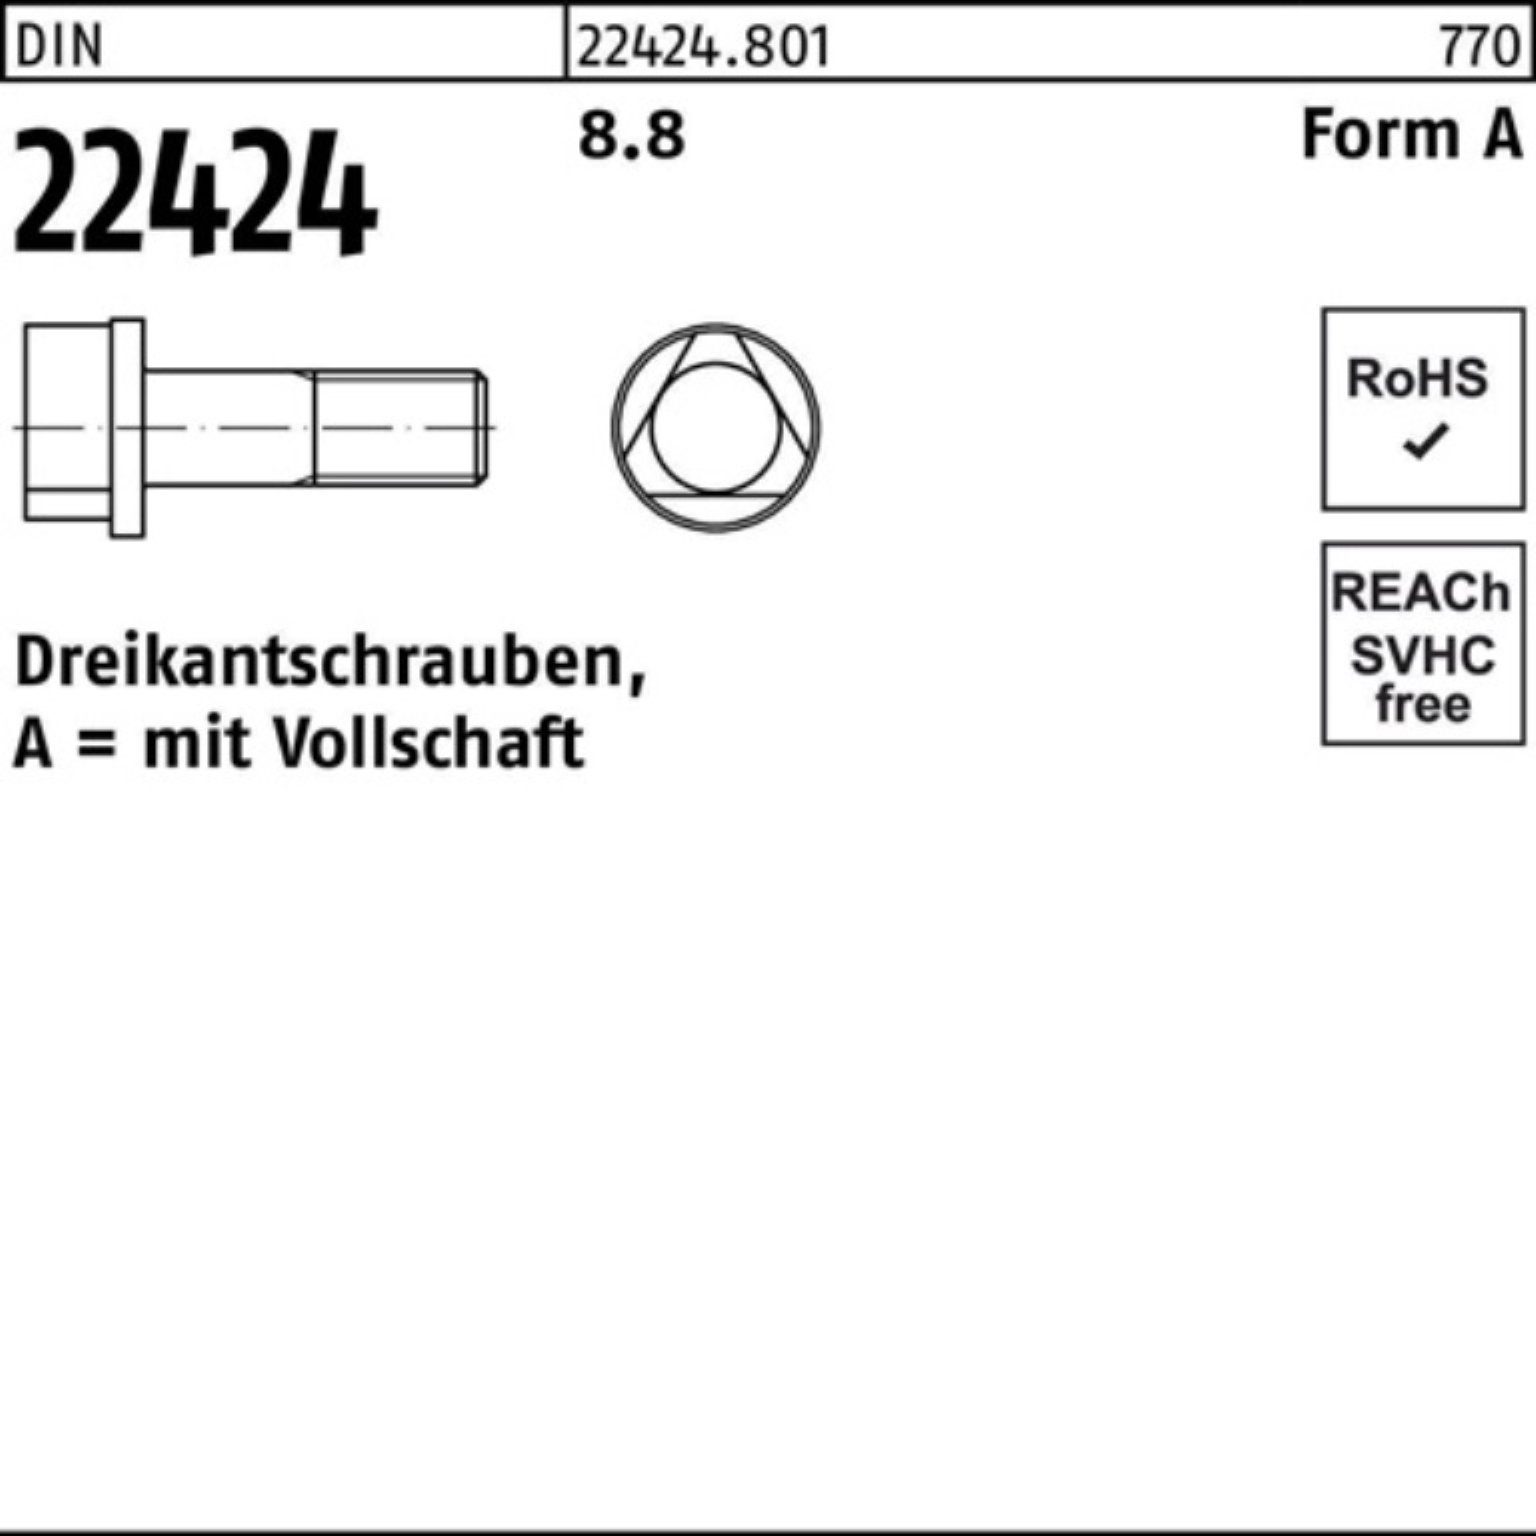 Reyher Schraube 100er Pack Dreikantschraube DIN 22424 FormA AM 10x 30 8.8 100 Stück D